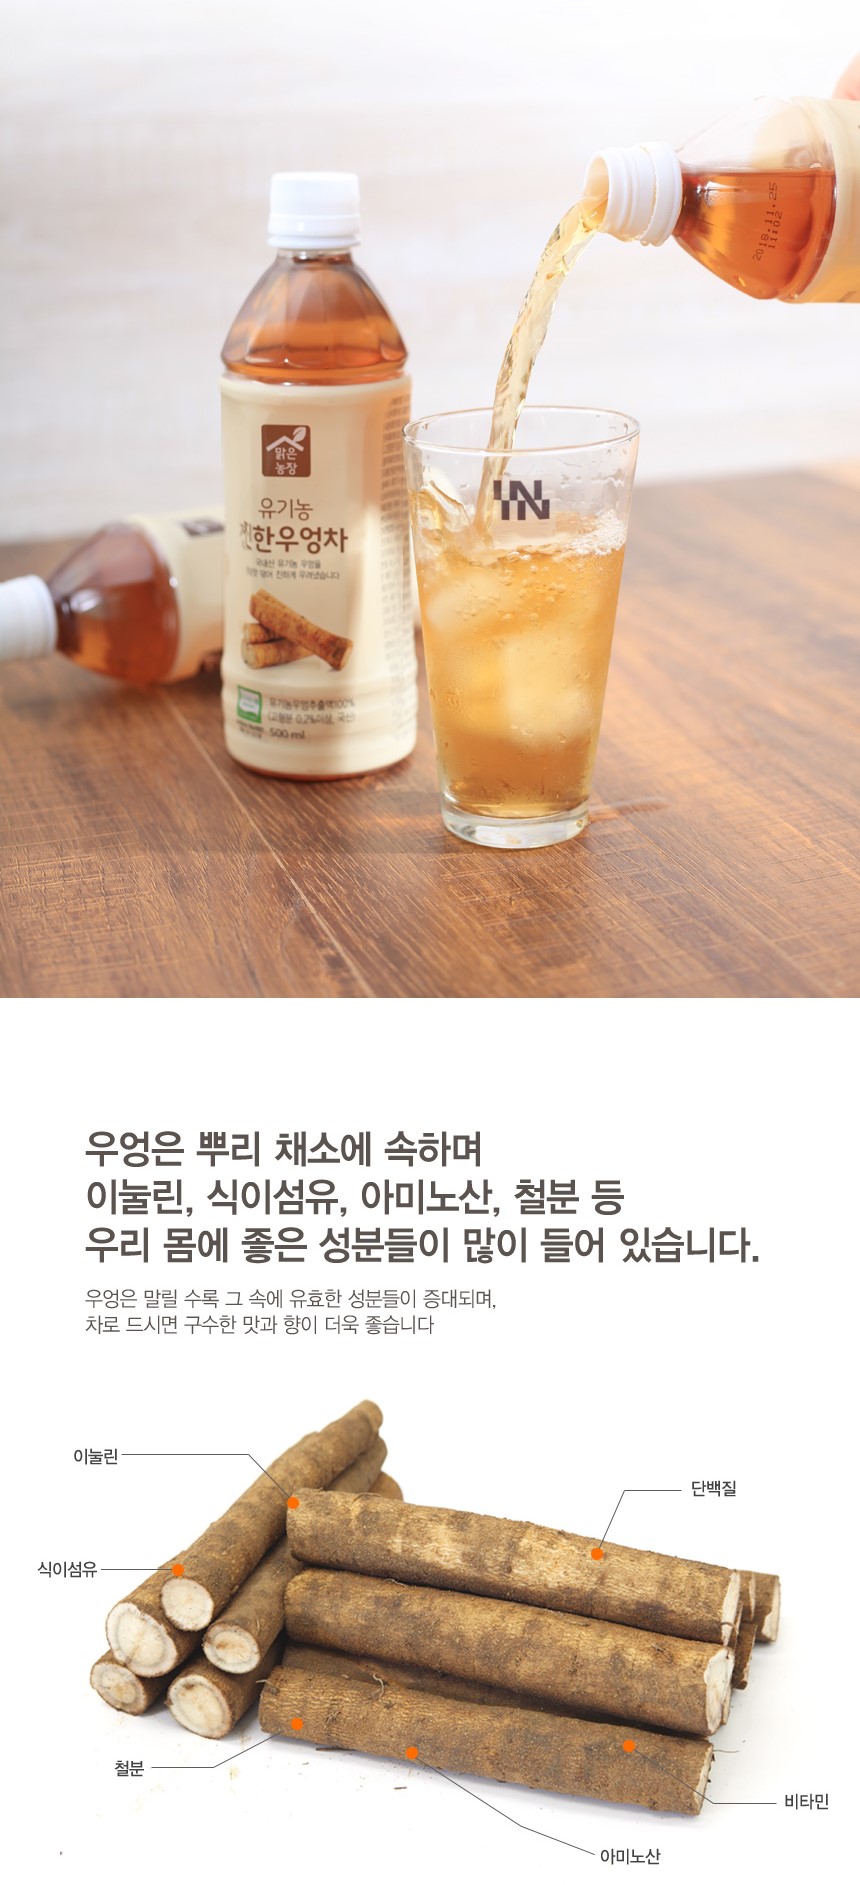 韓國食品-[Sunny Farm] 牛蒡茶 500ml